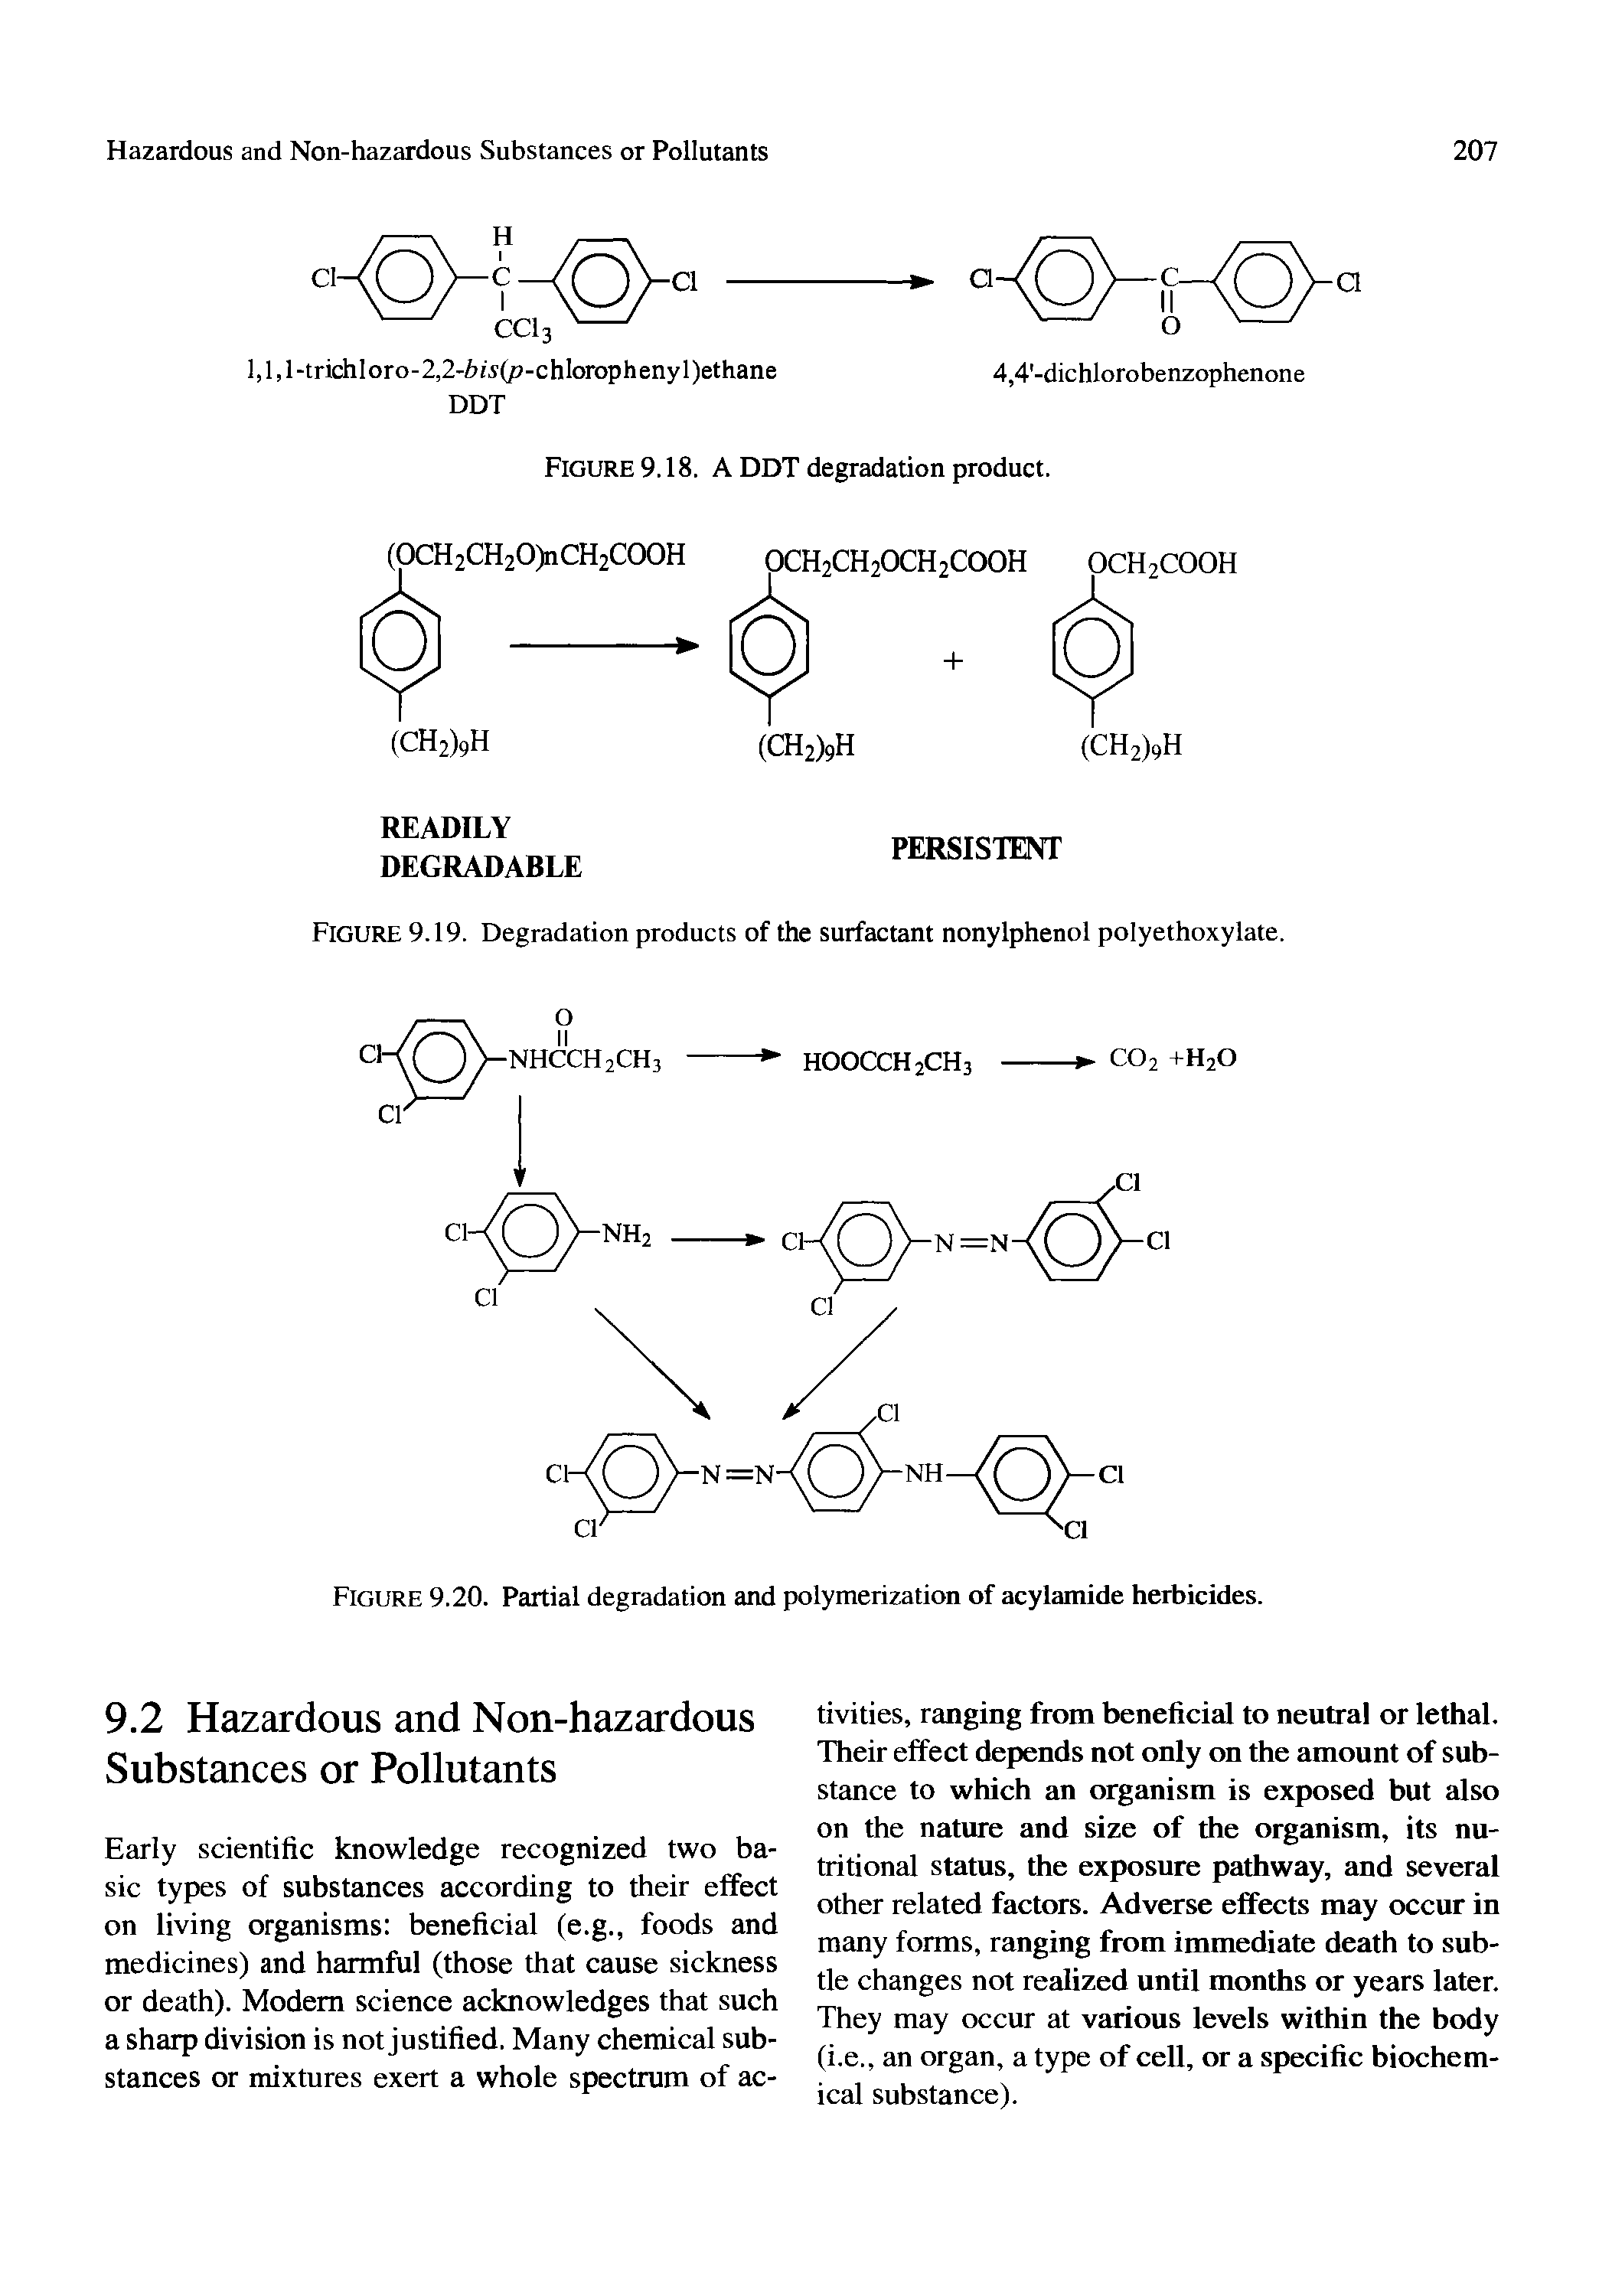 Figure 9.19. Degradation products of the surfactant nonylphenol polyethoxylate.